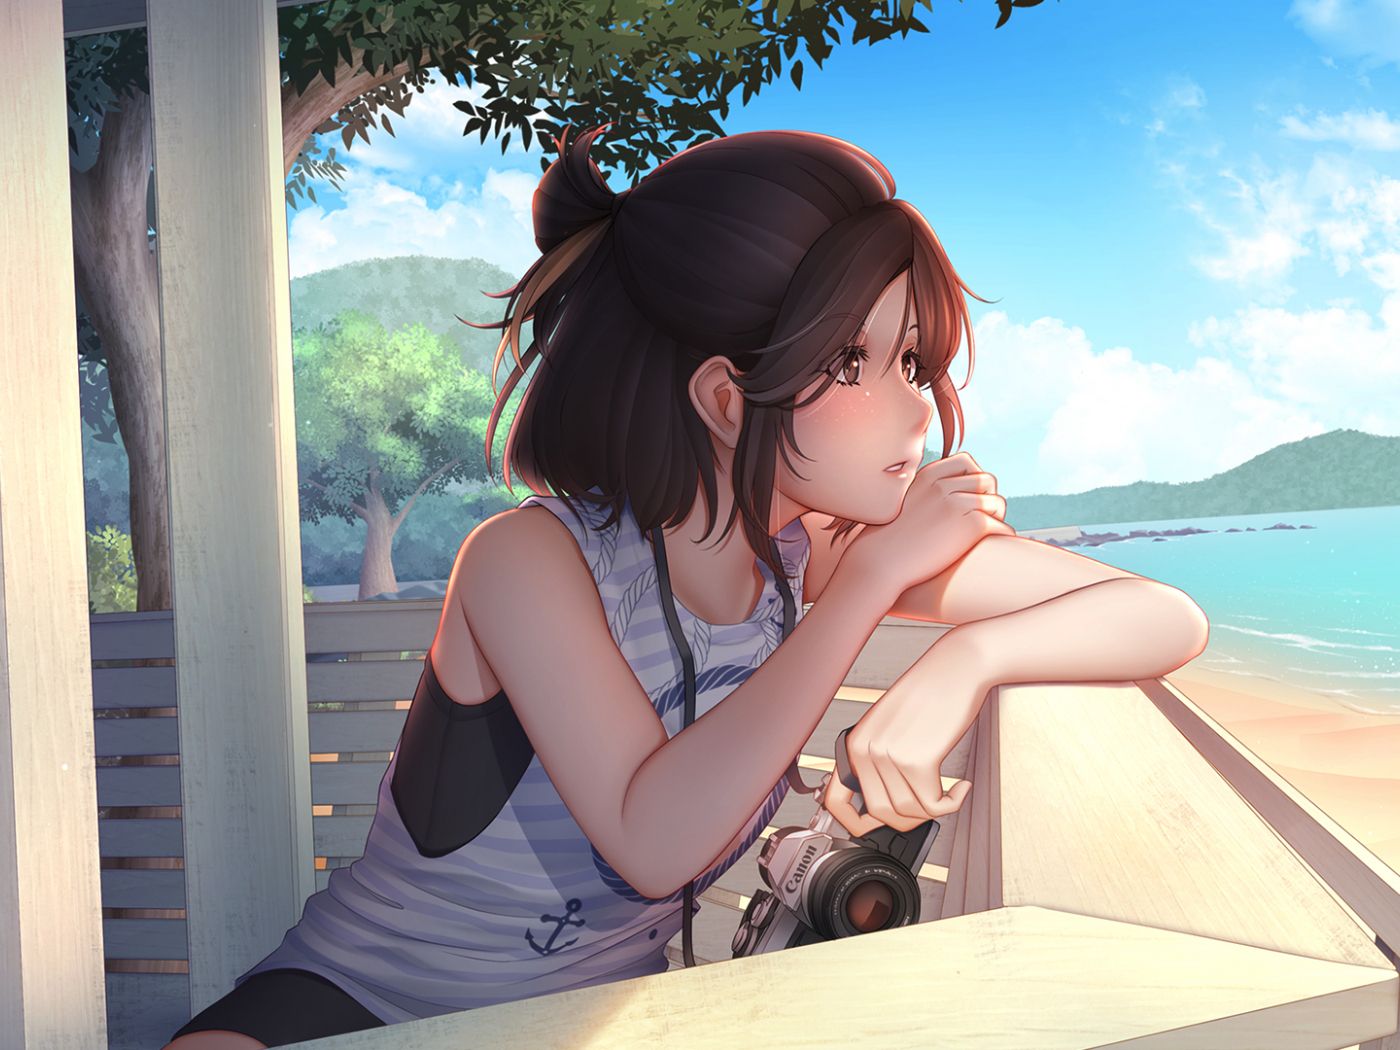 Desktop Wallpaper Original, Anime Girl, Summer, Beach, HD Image, Picture, Background, 7zpigb